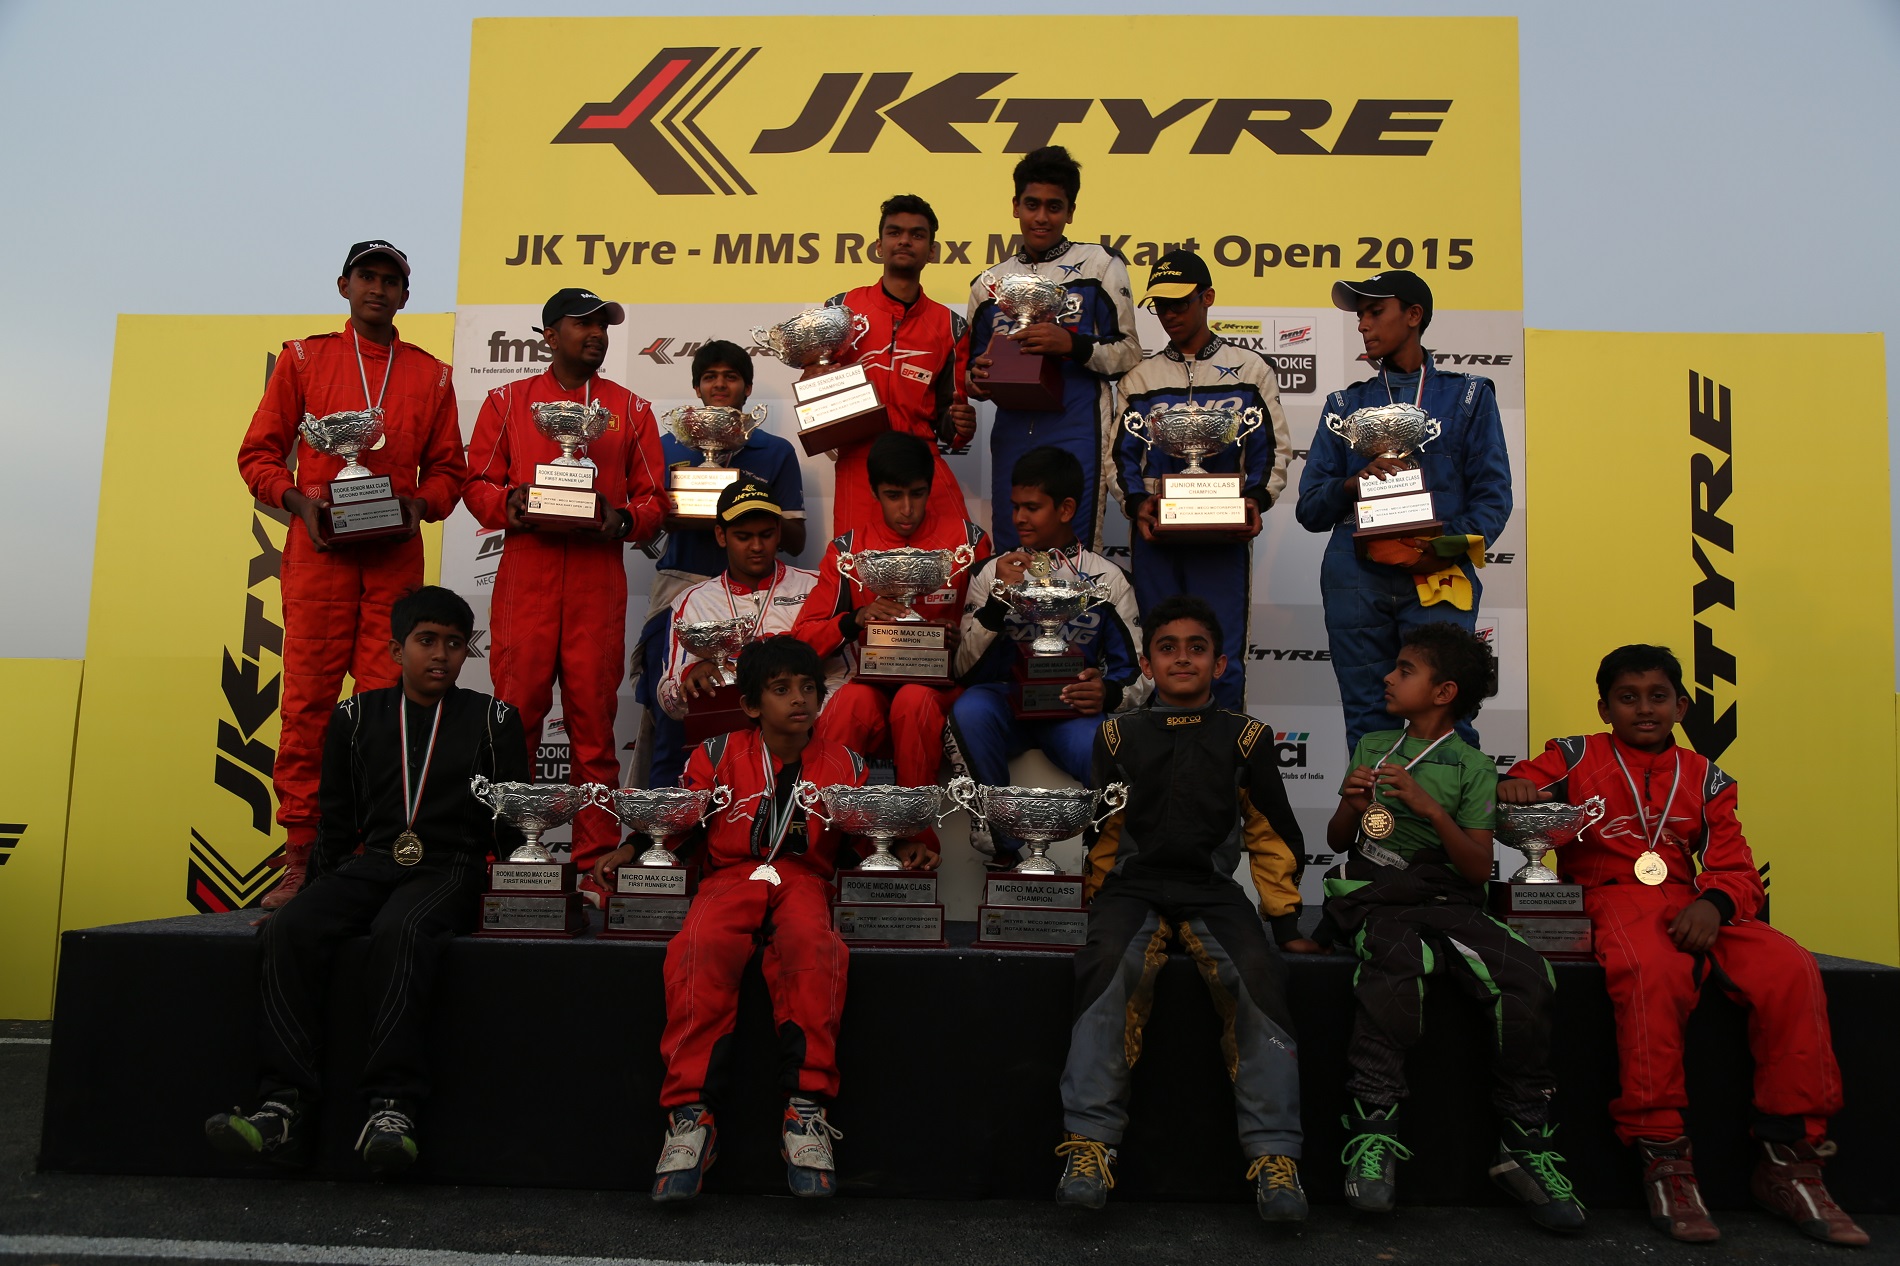 jk-tyre-mms-rotax-kart-open-2015-concludes-amidst-lots-of-action-jk-tyre-motorsport